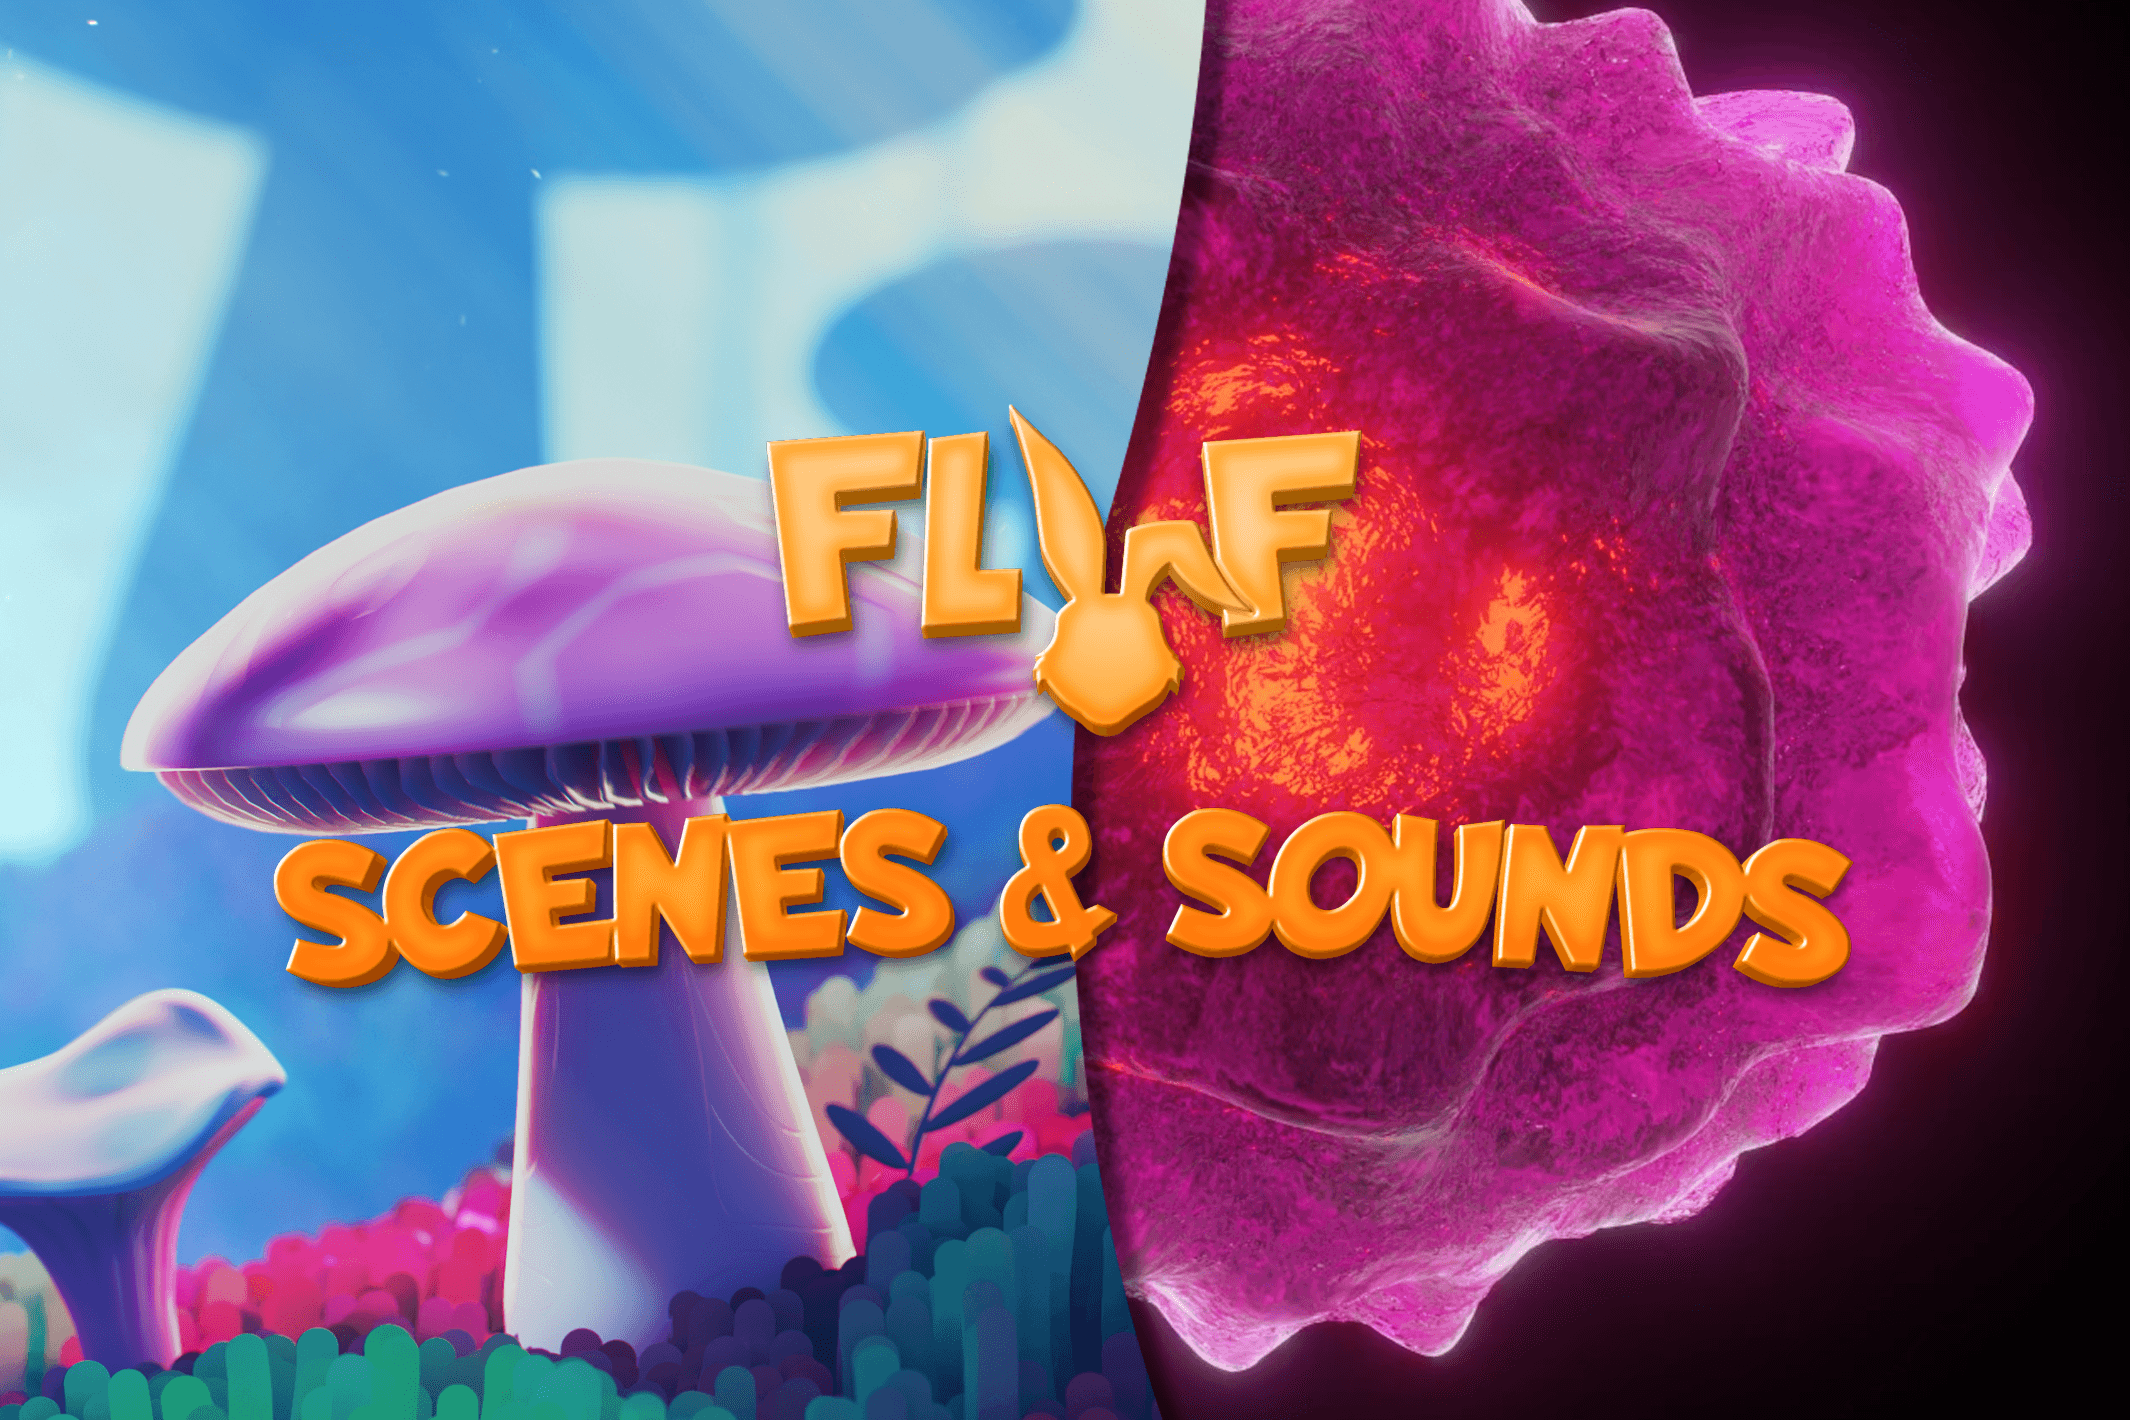 FLUF World: Scenes & Sounds